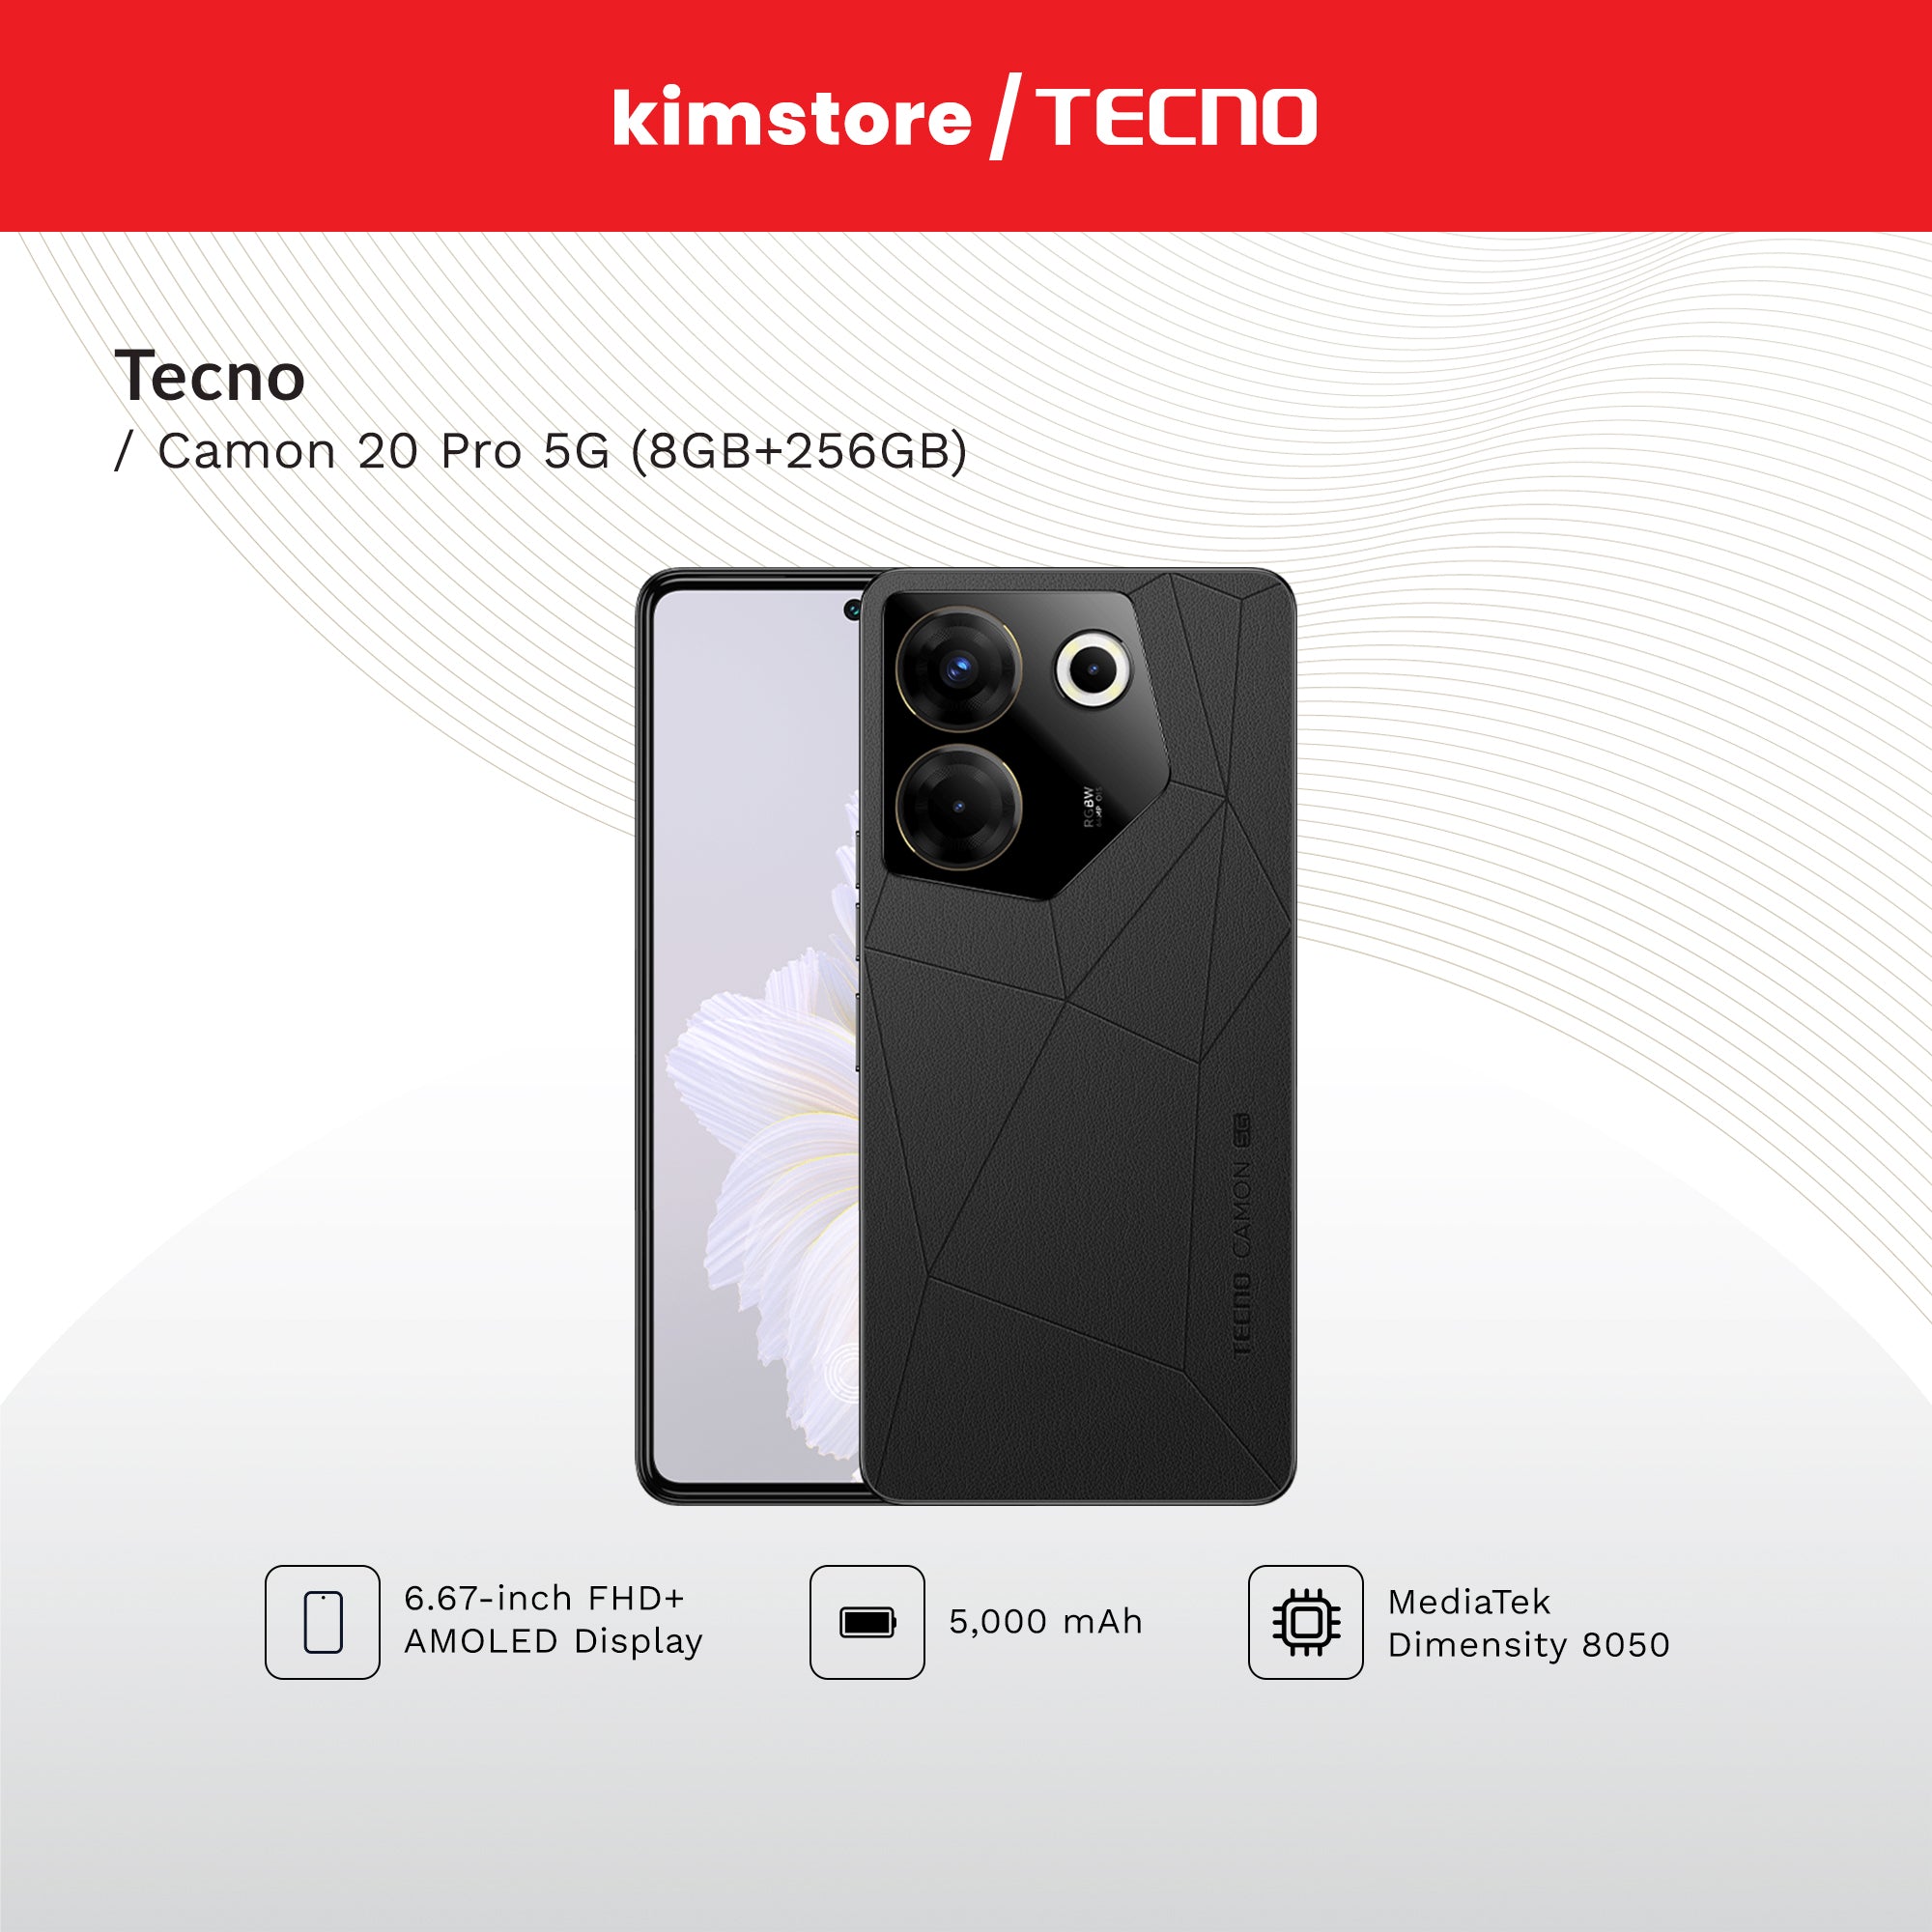 TECNO Camon 20 Pro 5G